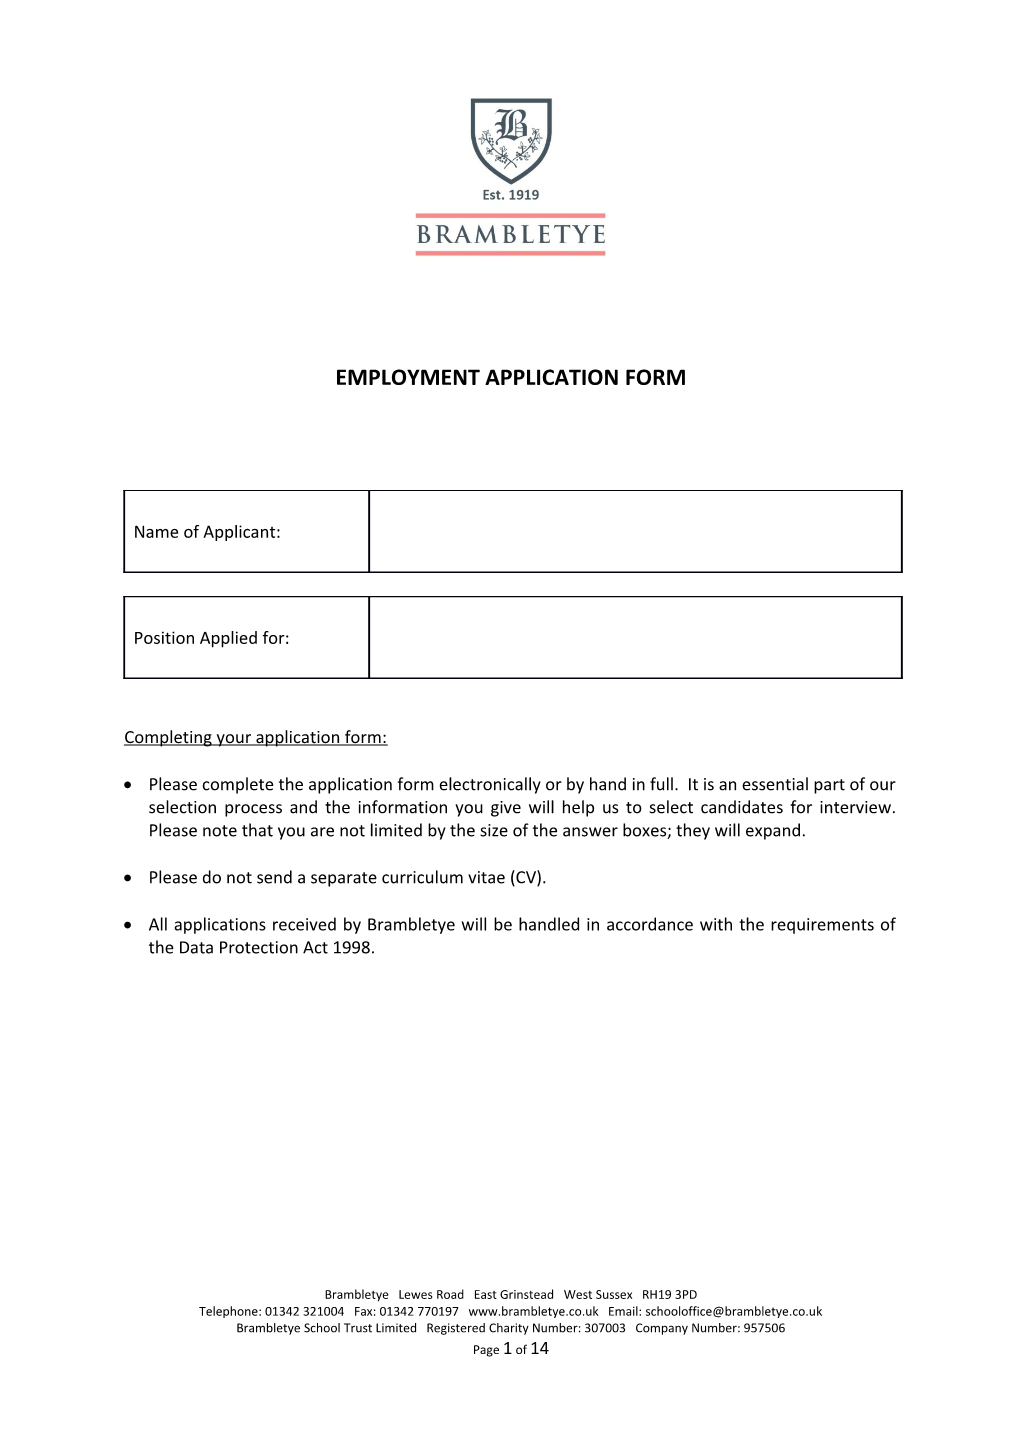 Employment Application Form s16